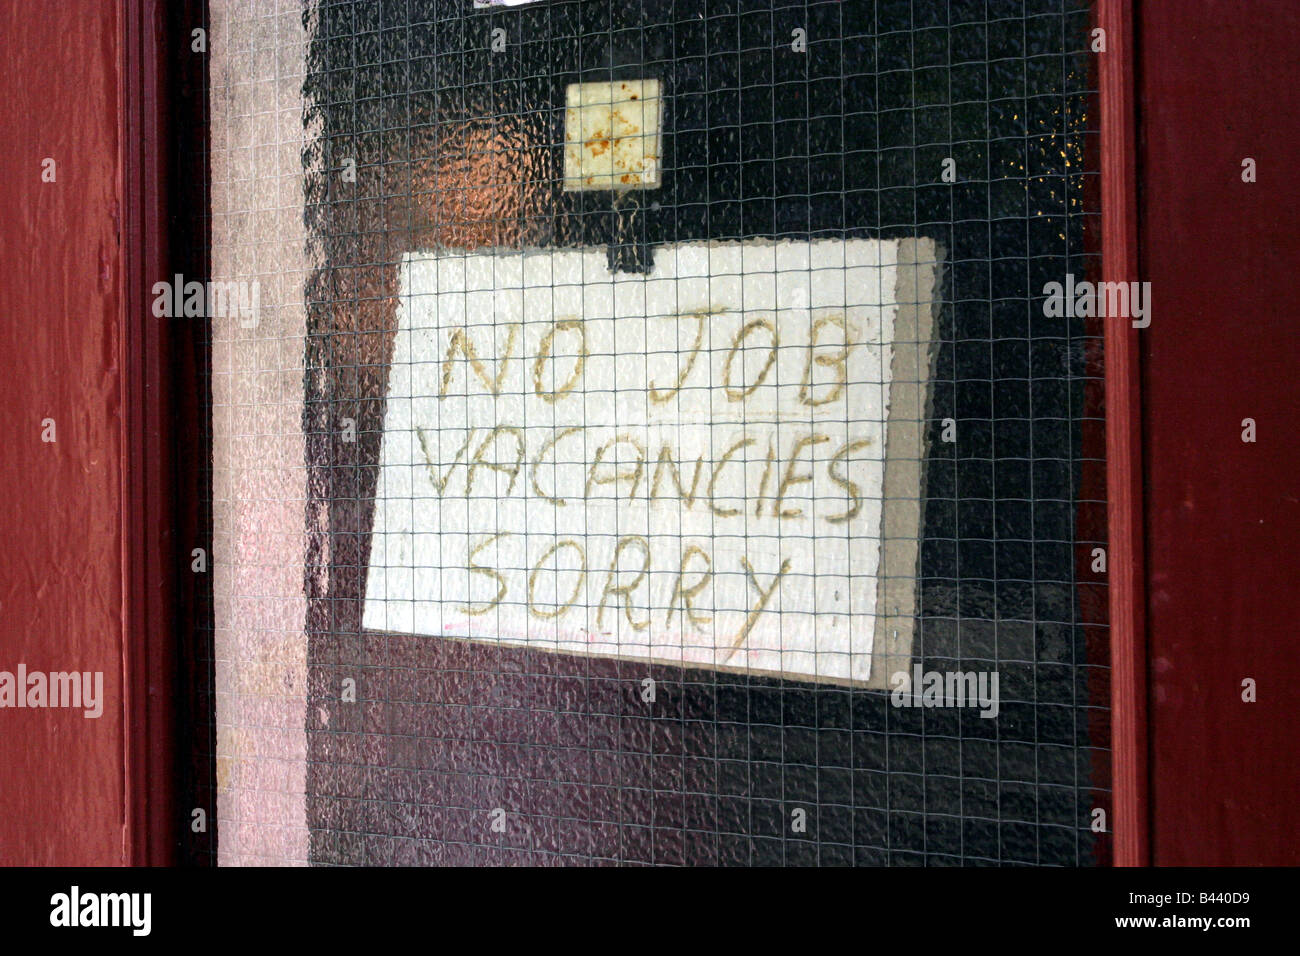 No Job Vacancies Sorry sign Stock Photo